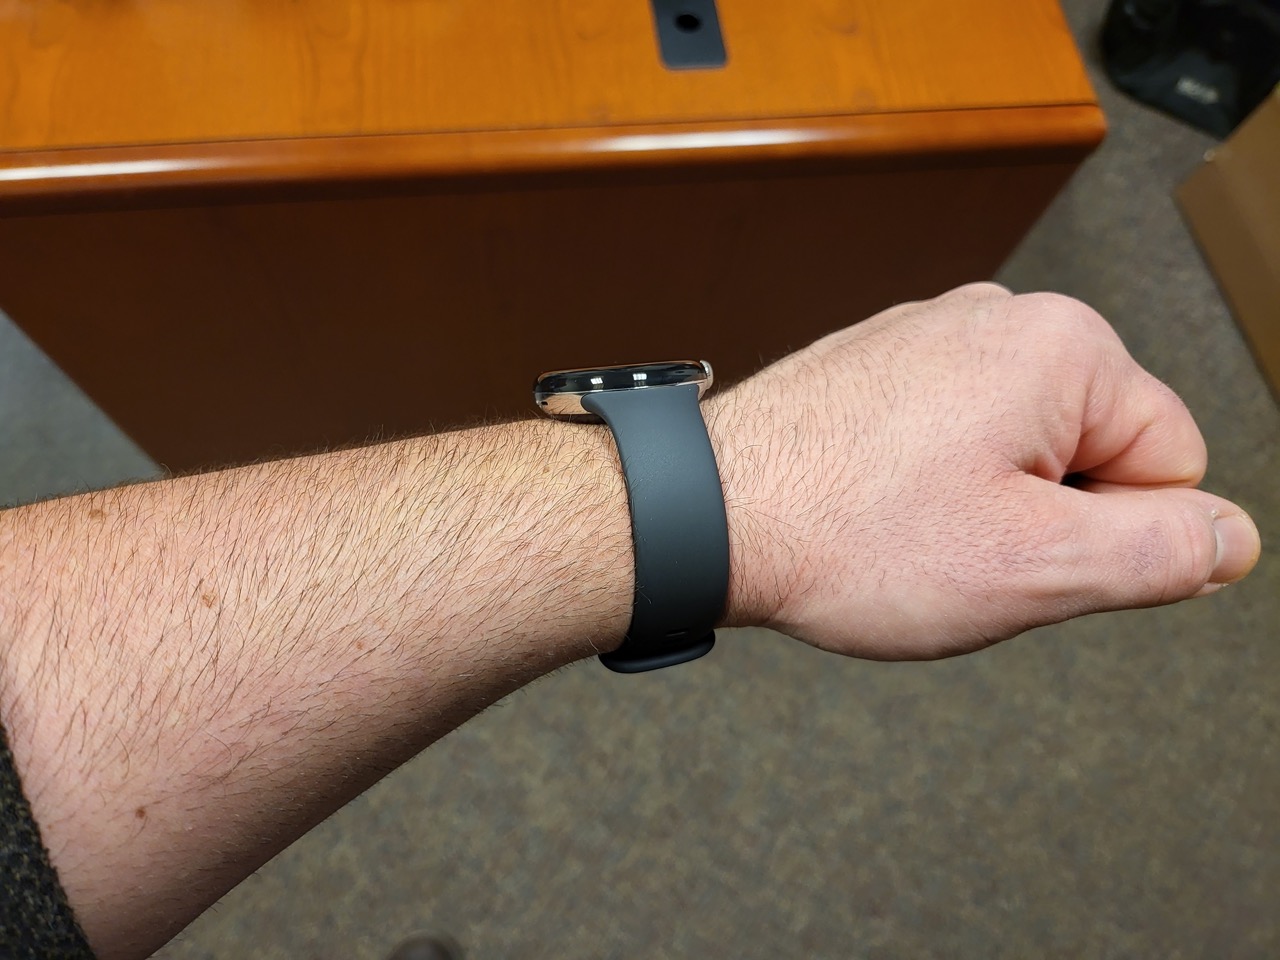 Pixel Watchの装着写真が公開。「これまでの時計で最も快適」と高評価